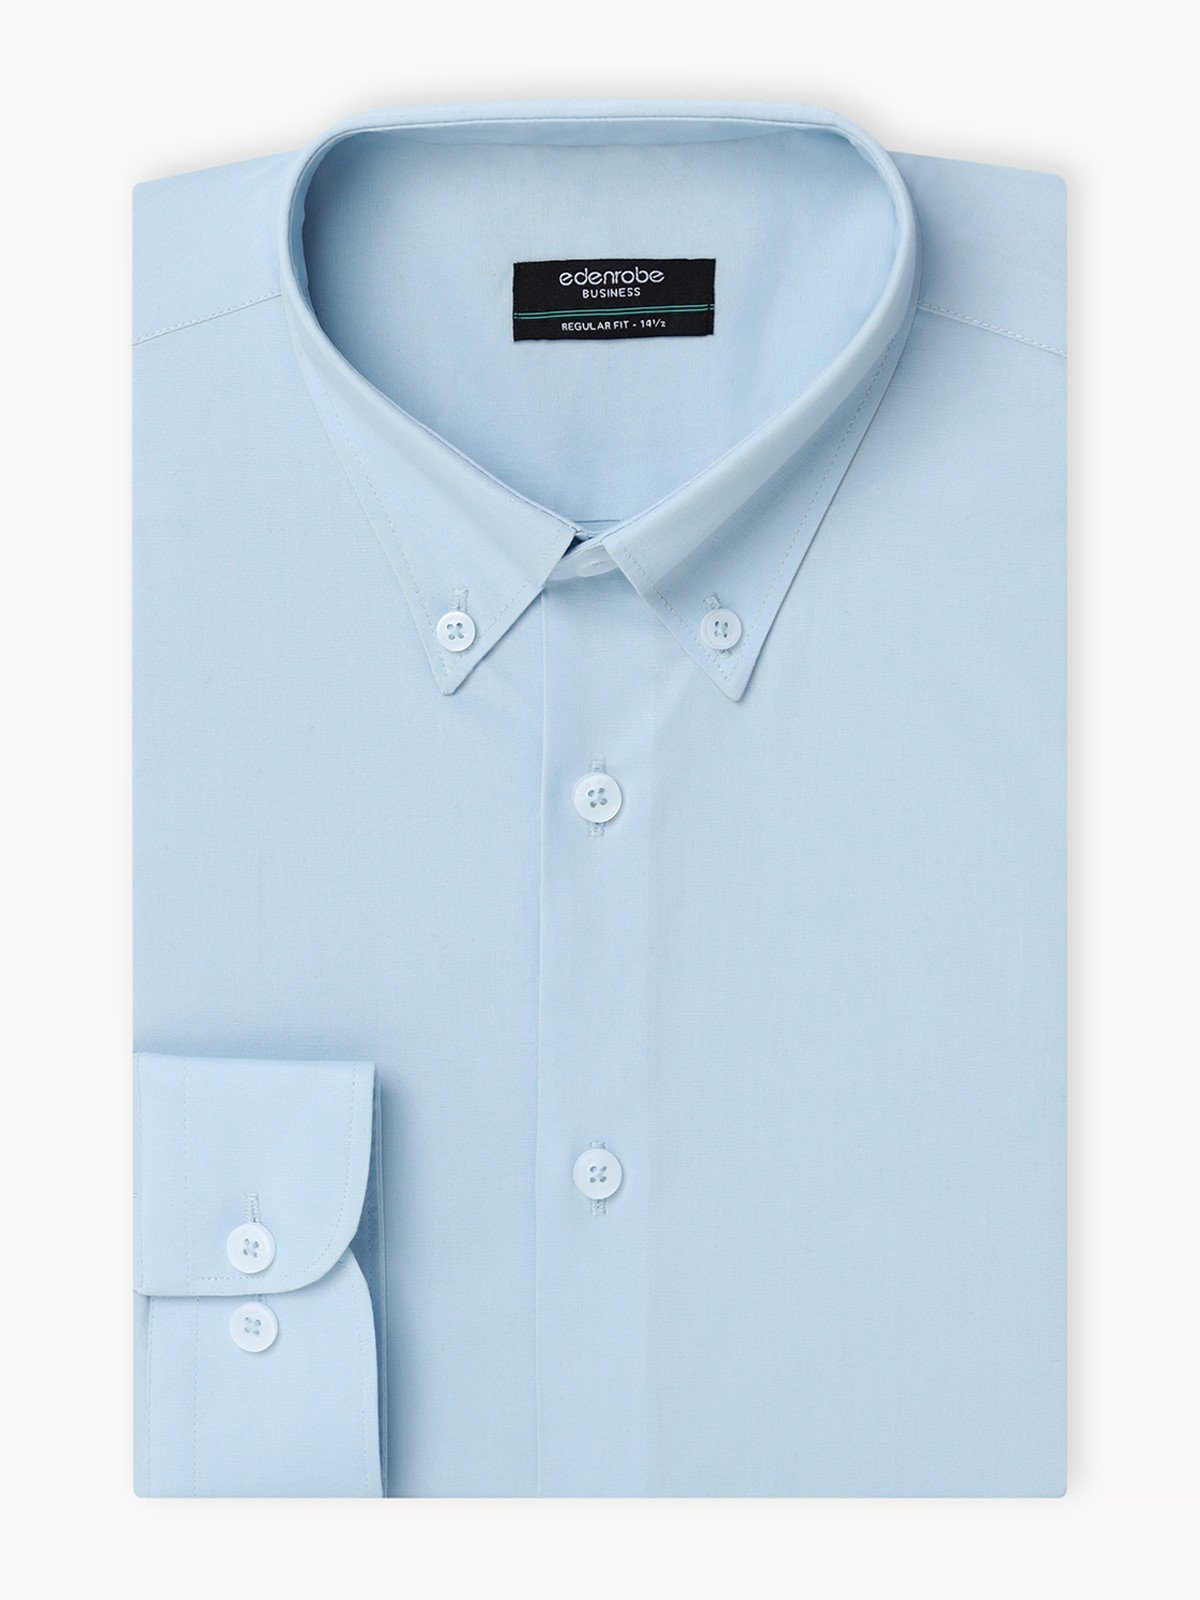 Men's Sky Blue Shirt Plain - EMTSB22-138